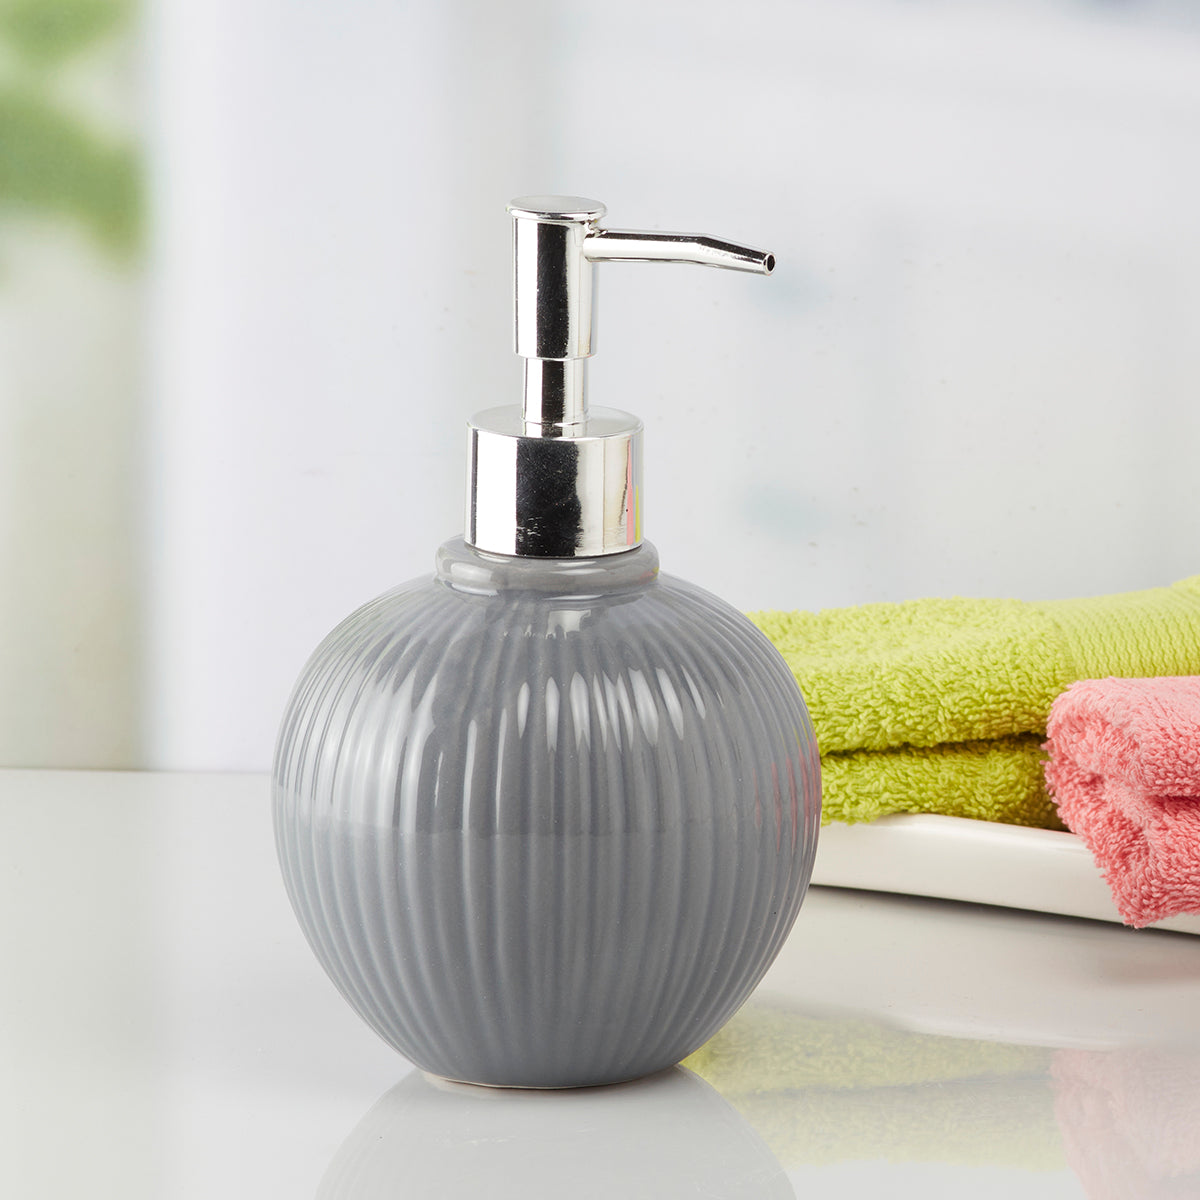 Ceramic Soap Dispenser handwash Pump for Bathroom, Set of 1, Grey (8051)